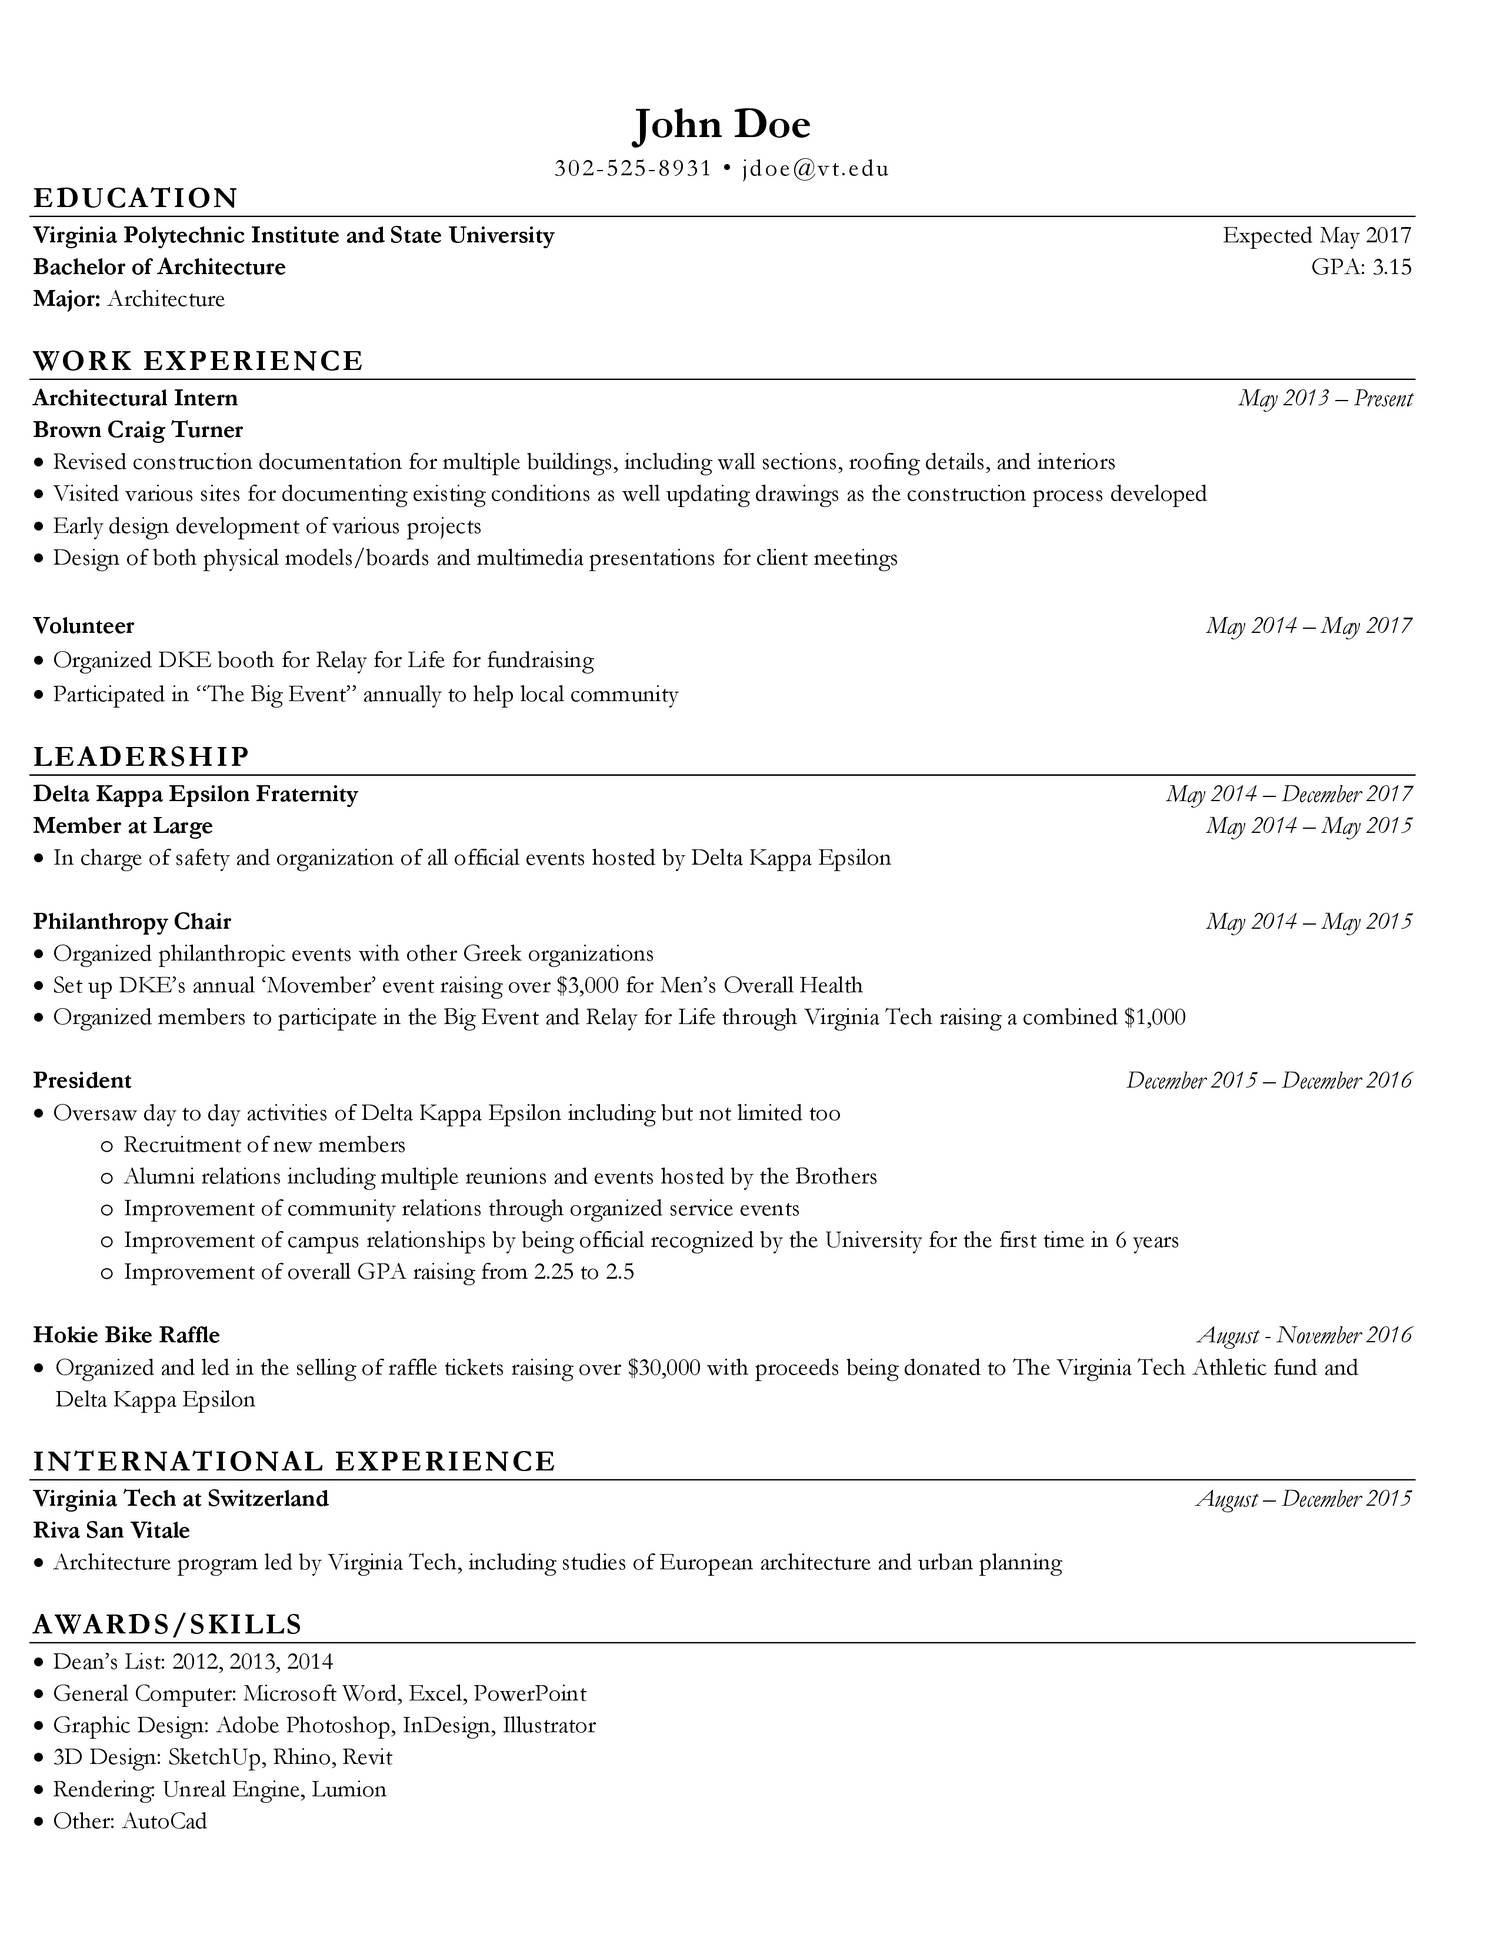 reddit resume service